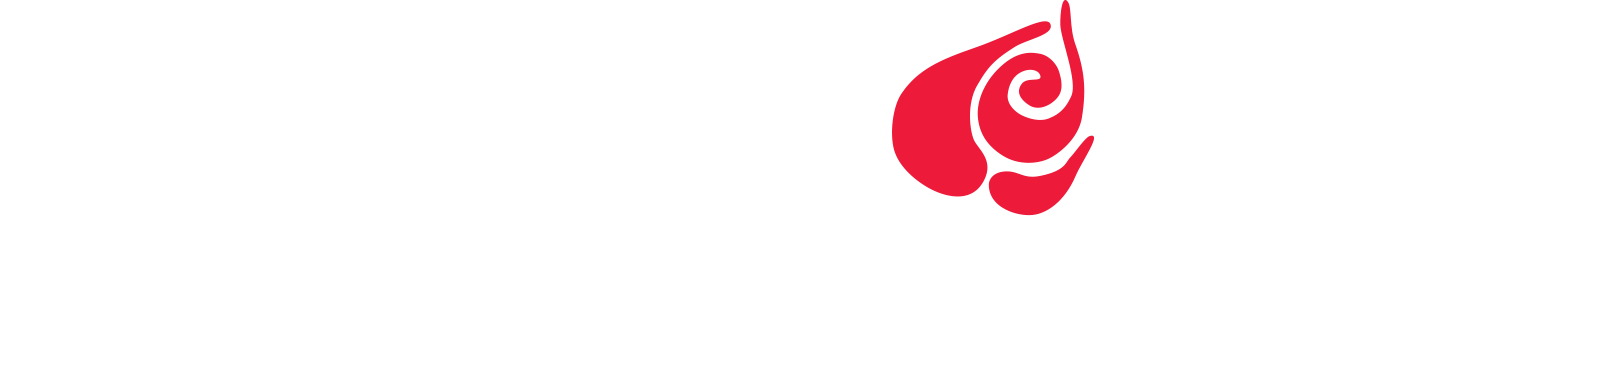 Rosies-logo1600380